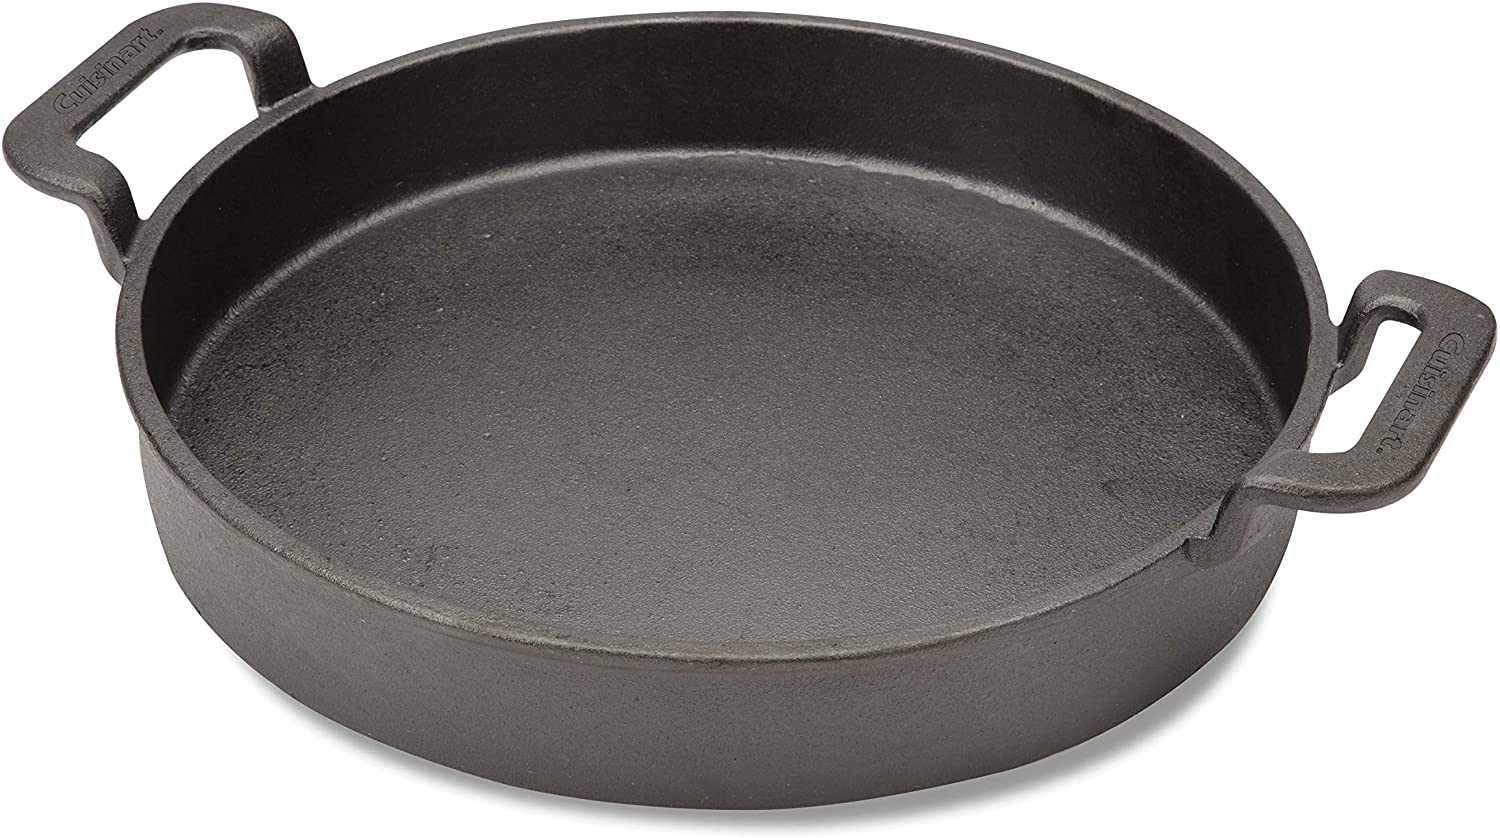 Cuisinart 10 Inch Cast Iron Griddle Pan 